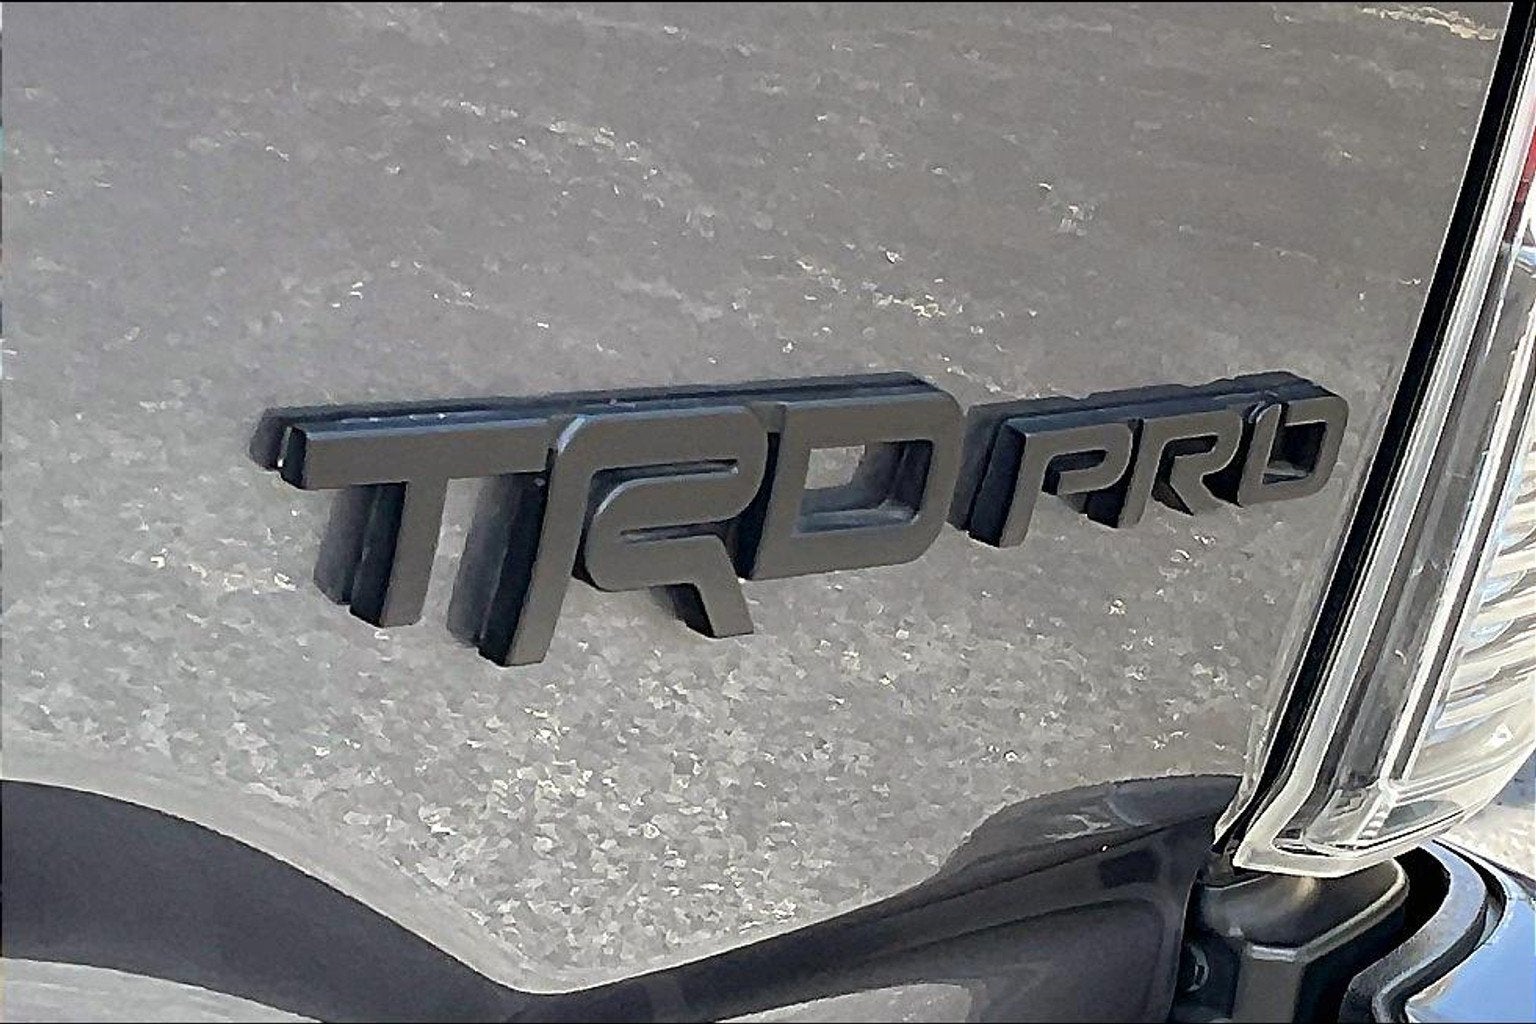 2021 Toyota Tacoma 4WD TRD Pro